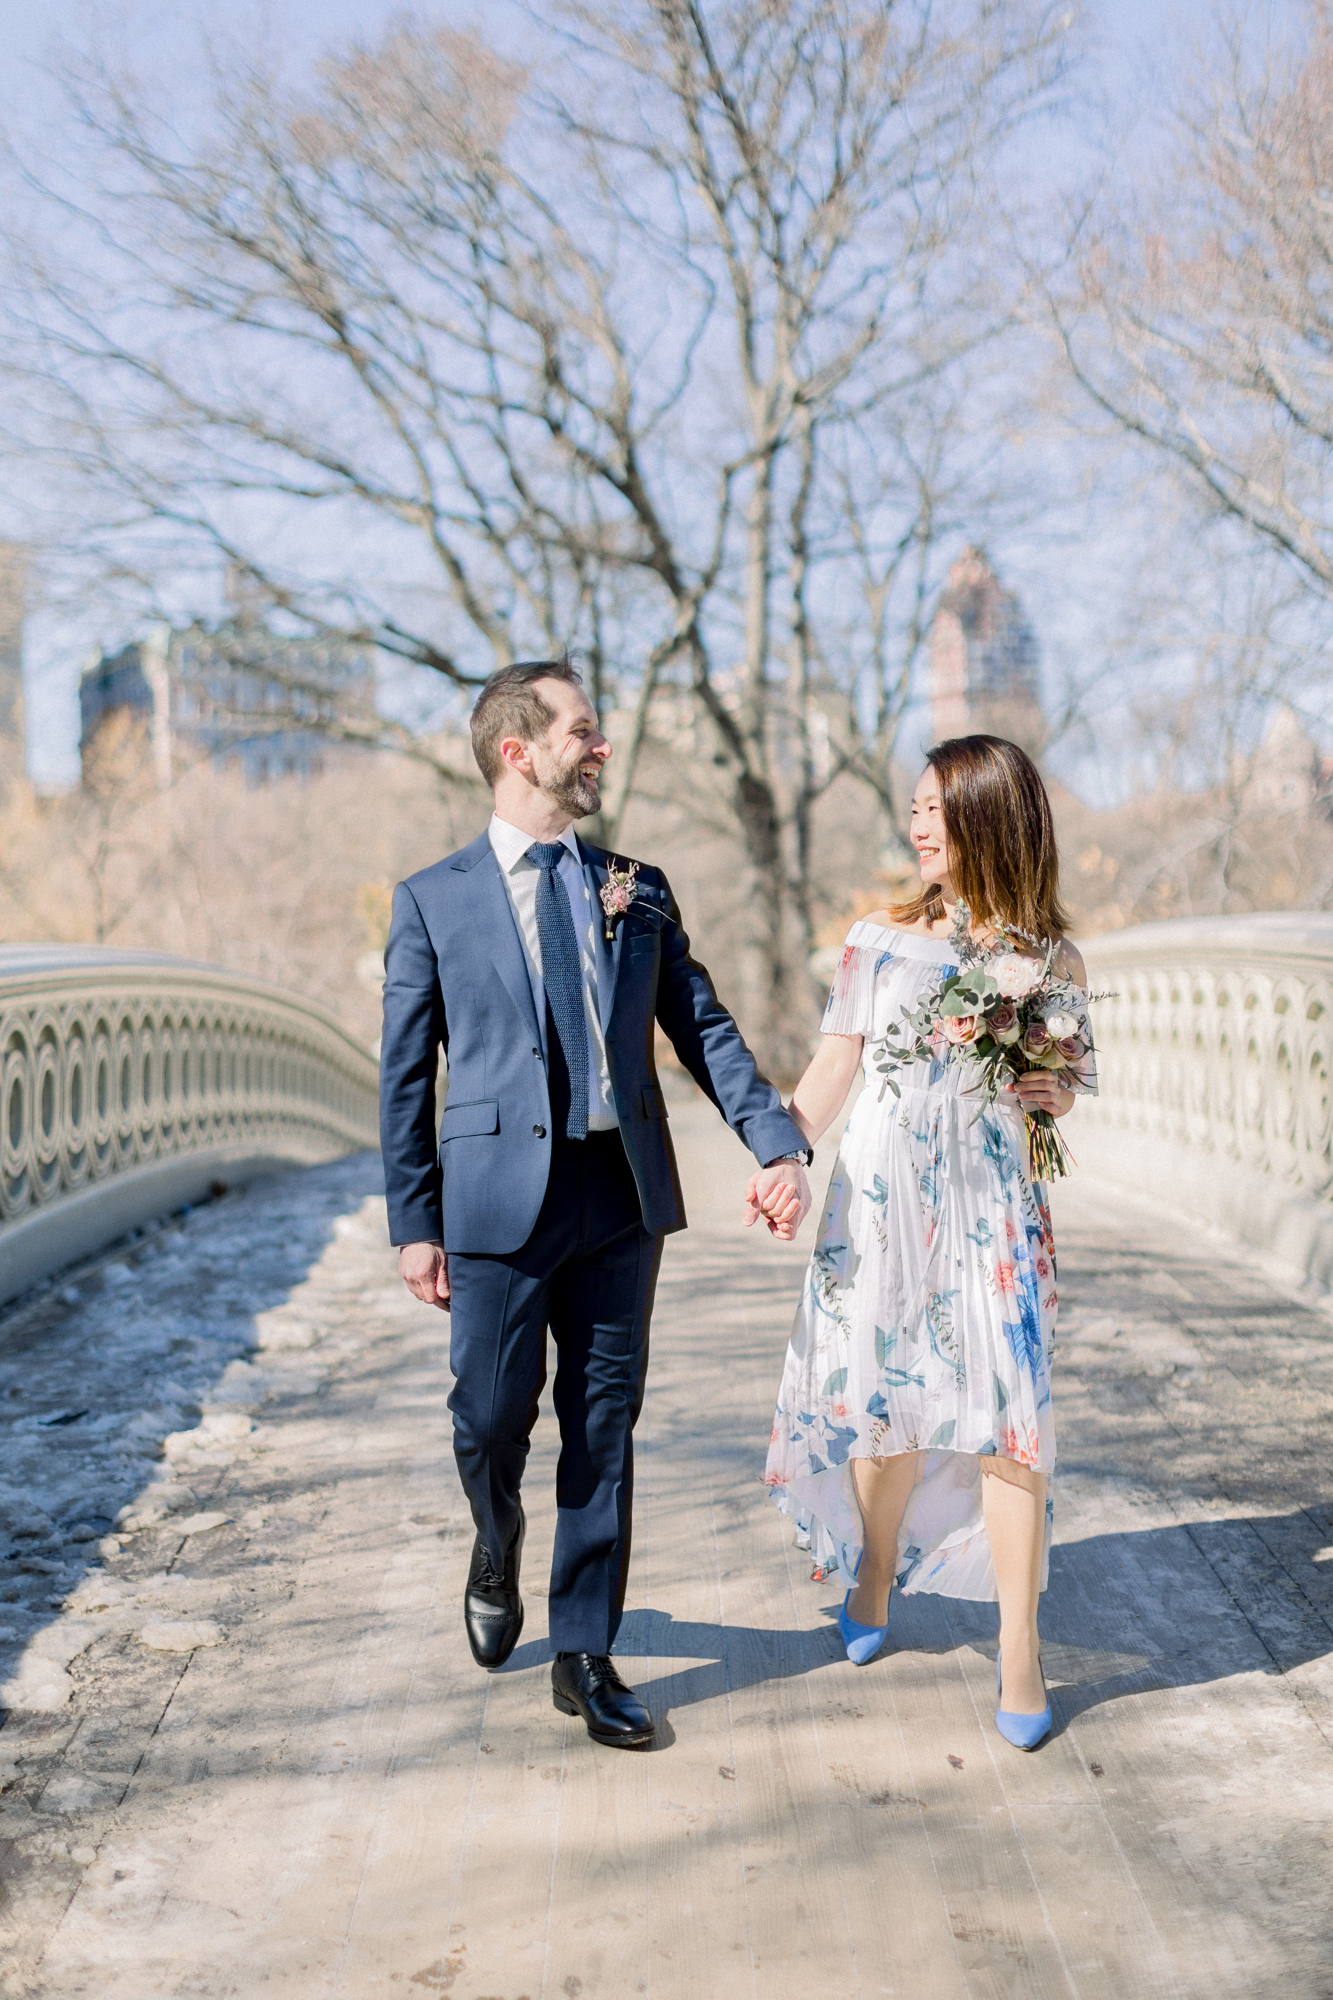 Idyllic Central Park Wedding Photos in Wintery NYC